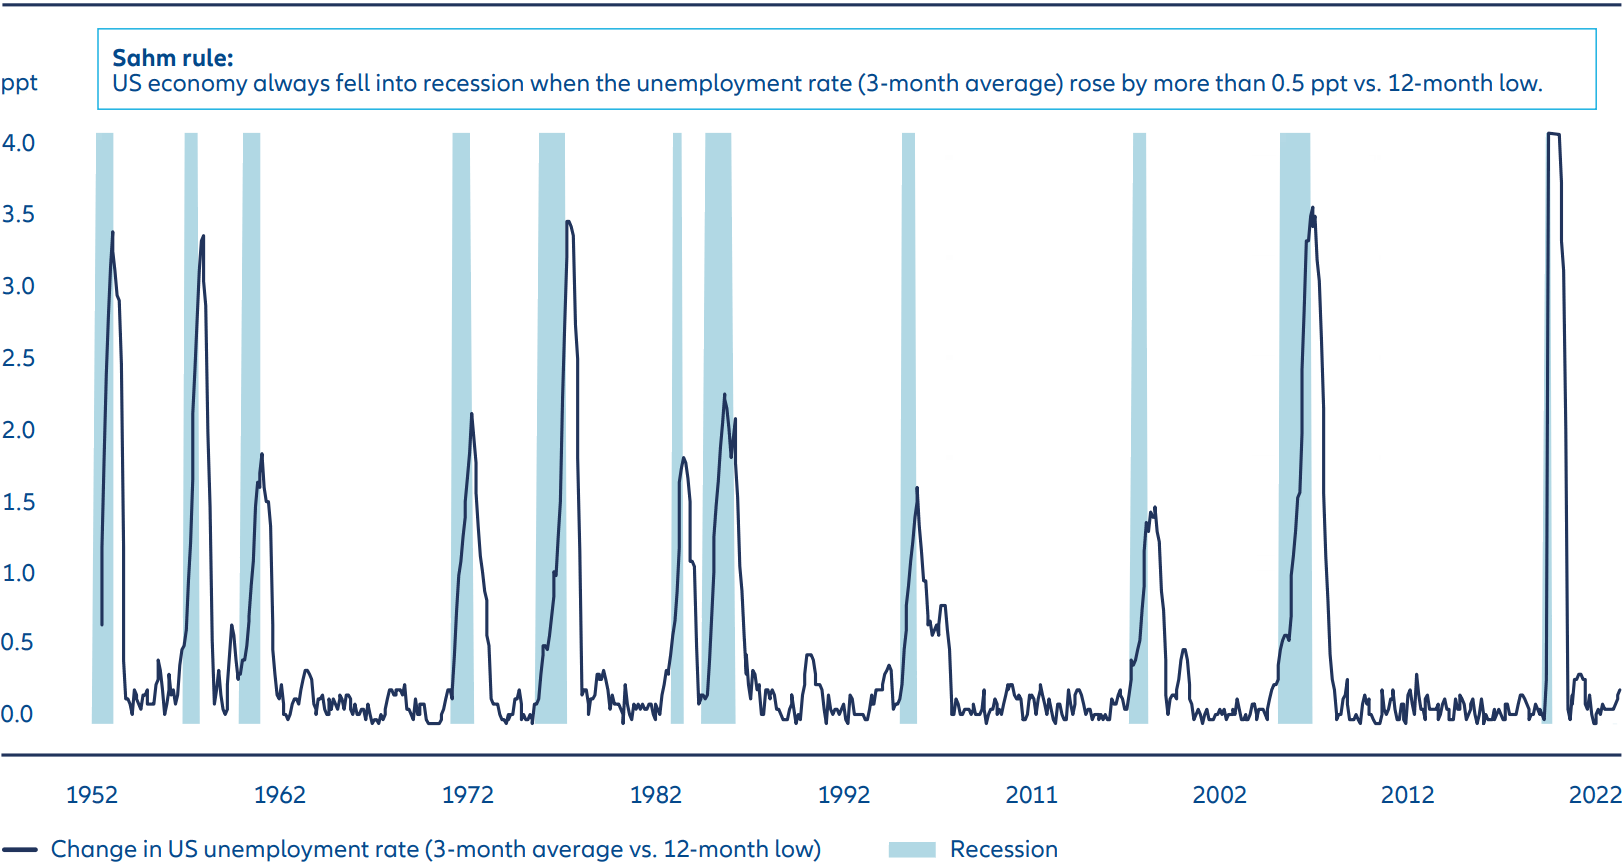 Exhibit 3: Deteriorating labour market has always led the US into recession